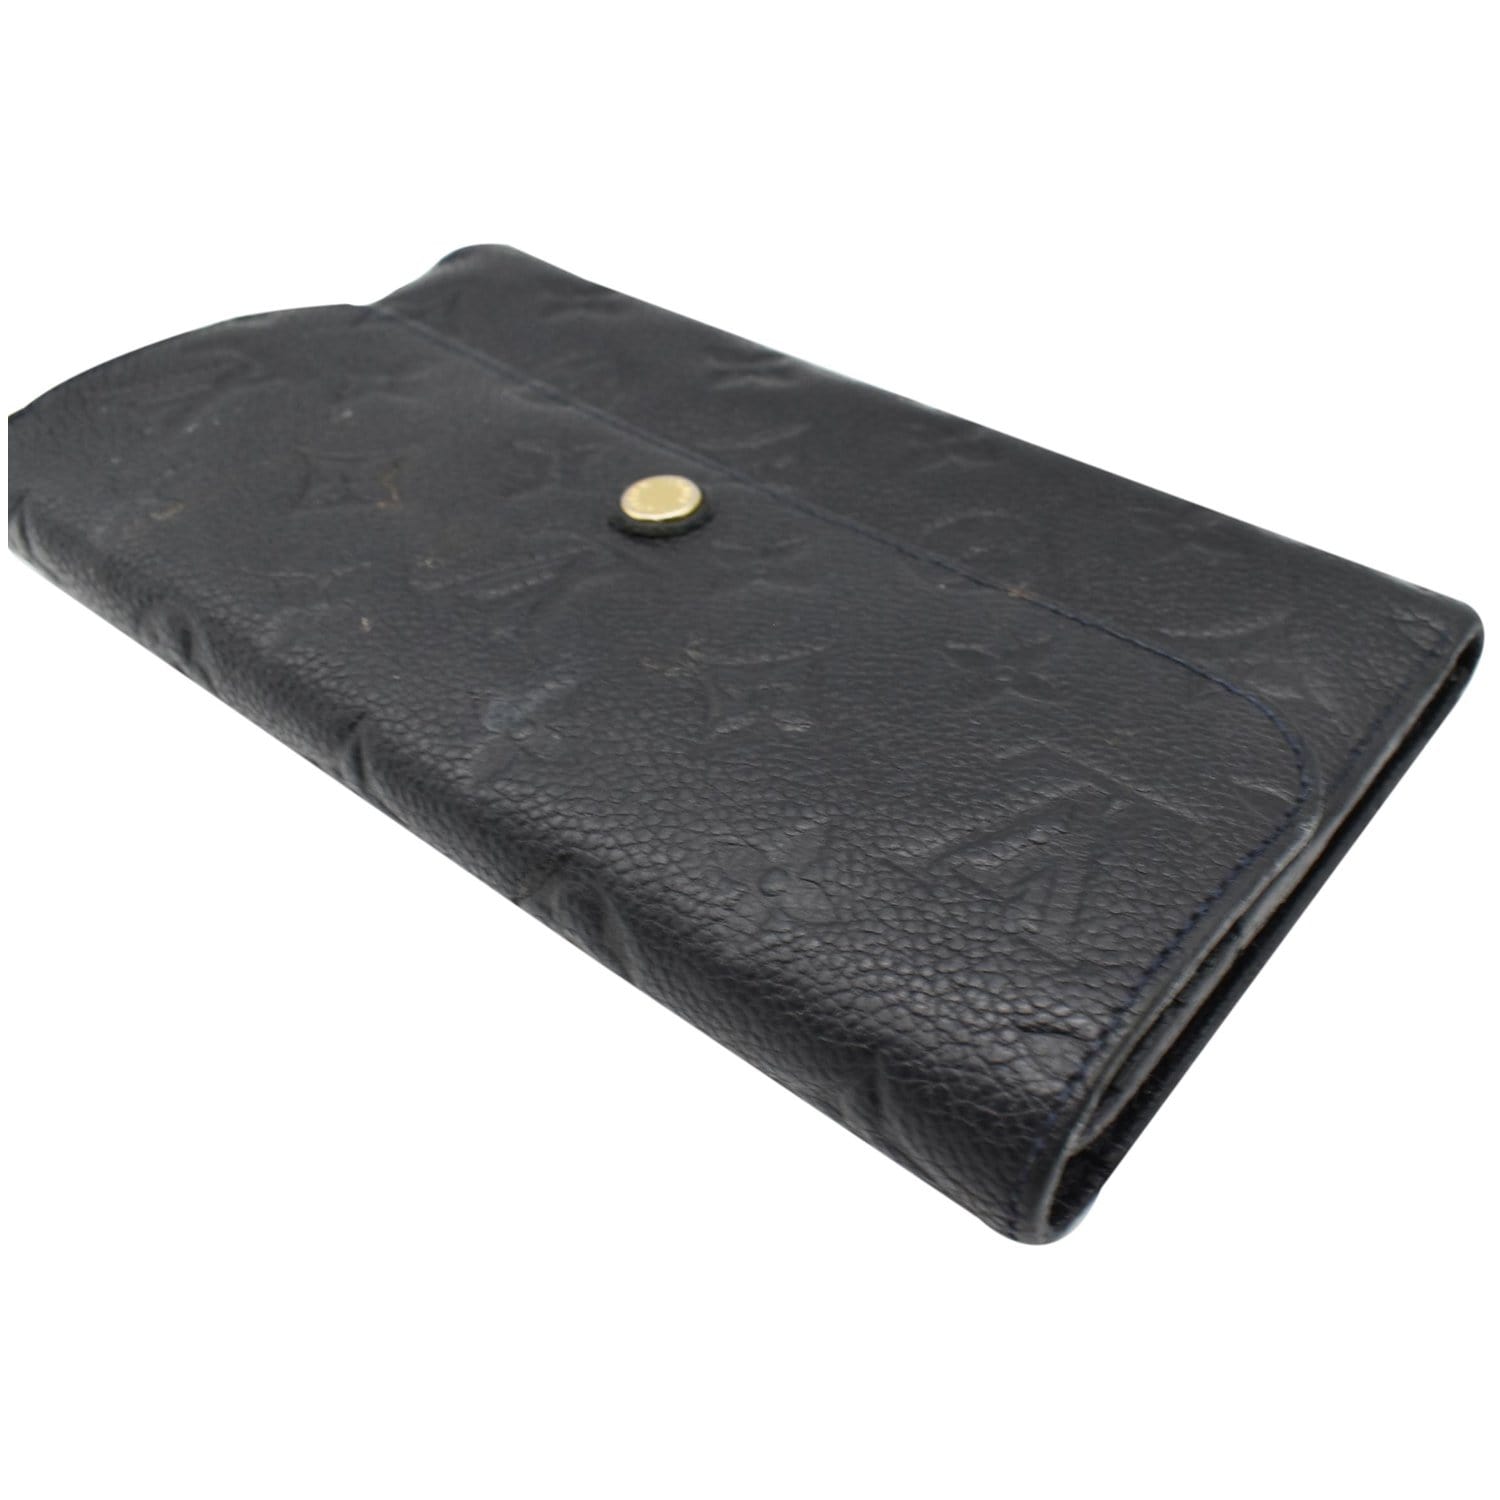 LOUIS VUITTON Tri-fold wallet – kingram-japan